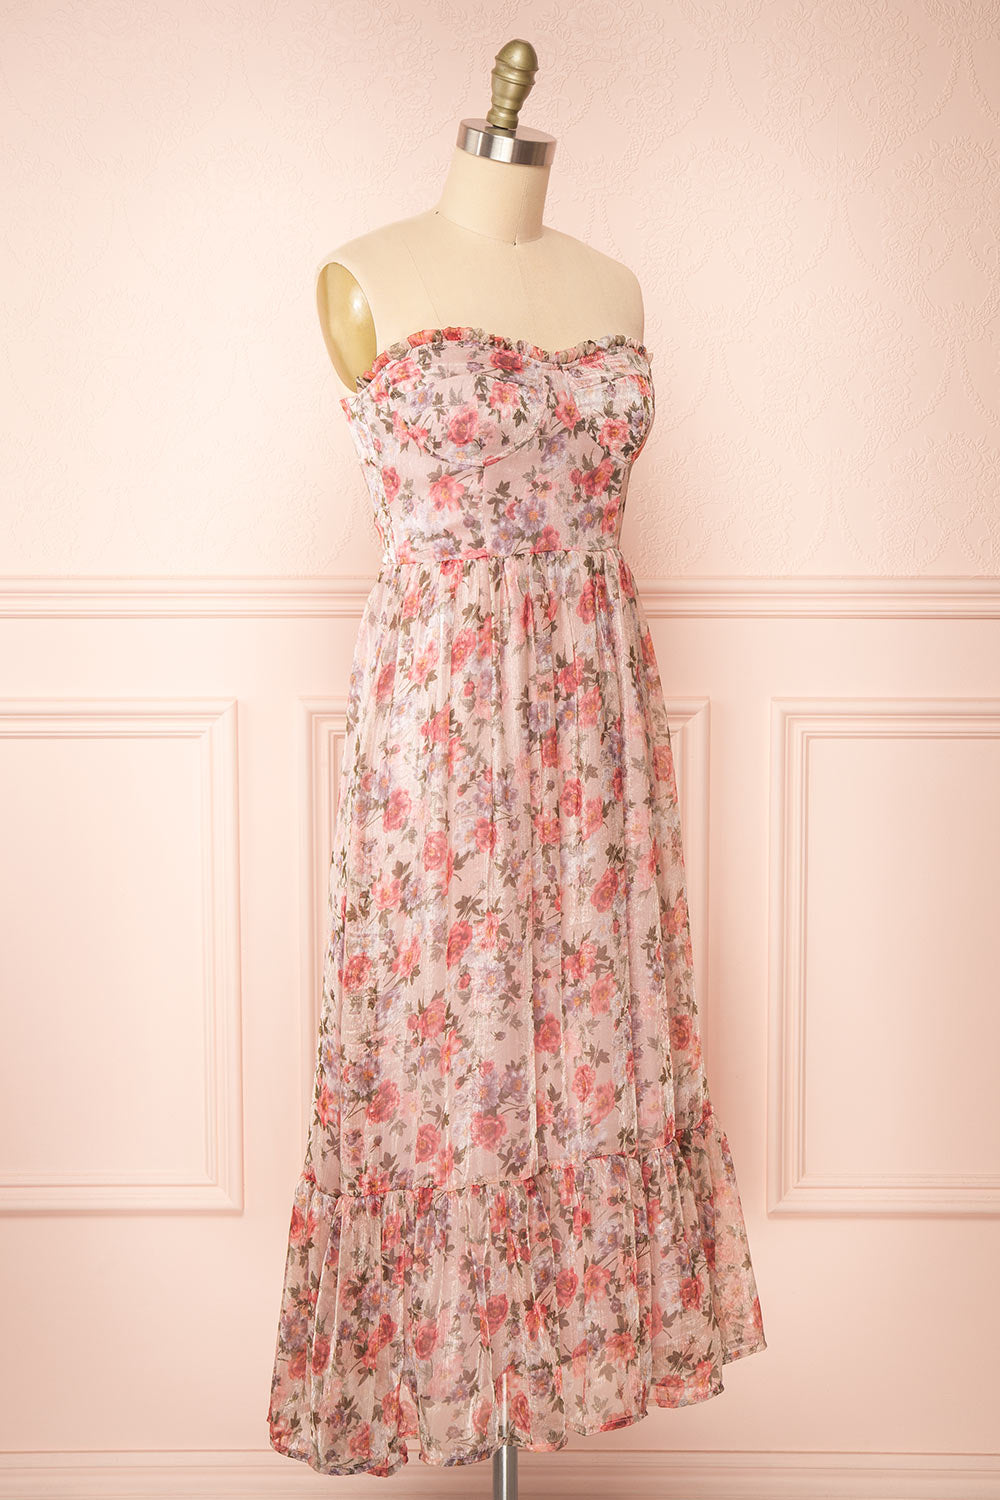 Katara Bustier Floral Midi Dress w/ Removable Straps | Boutique 1861 side view 